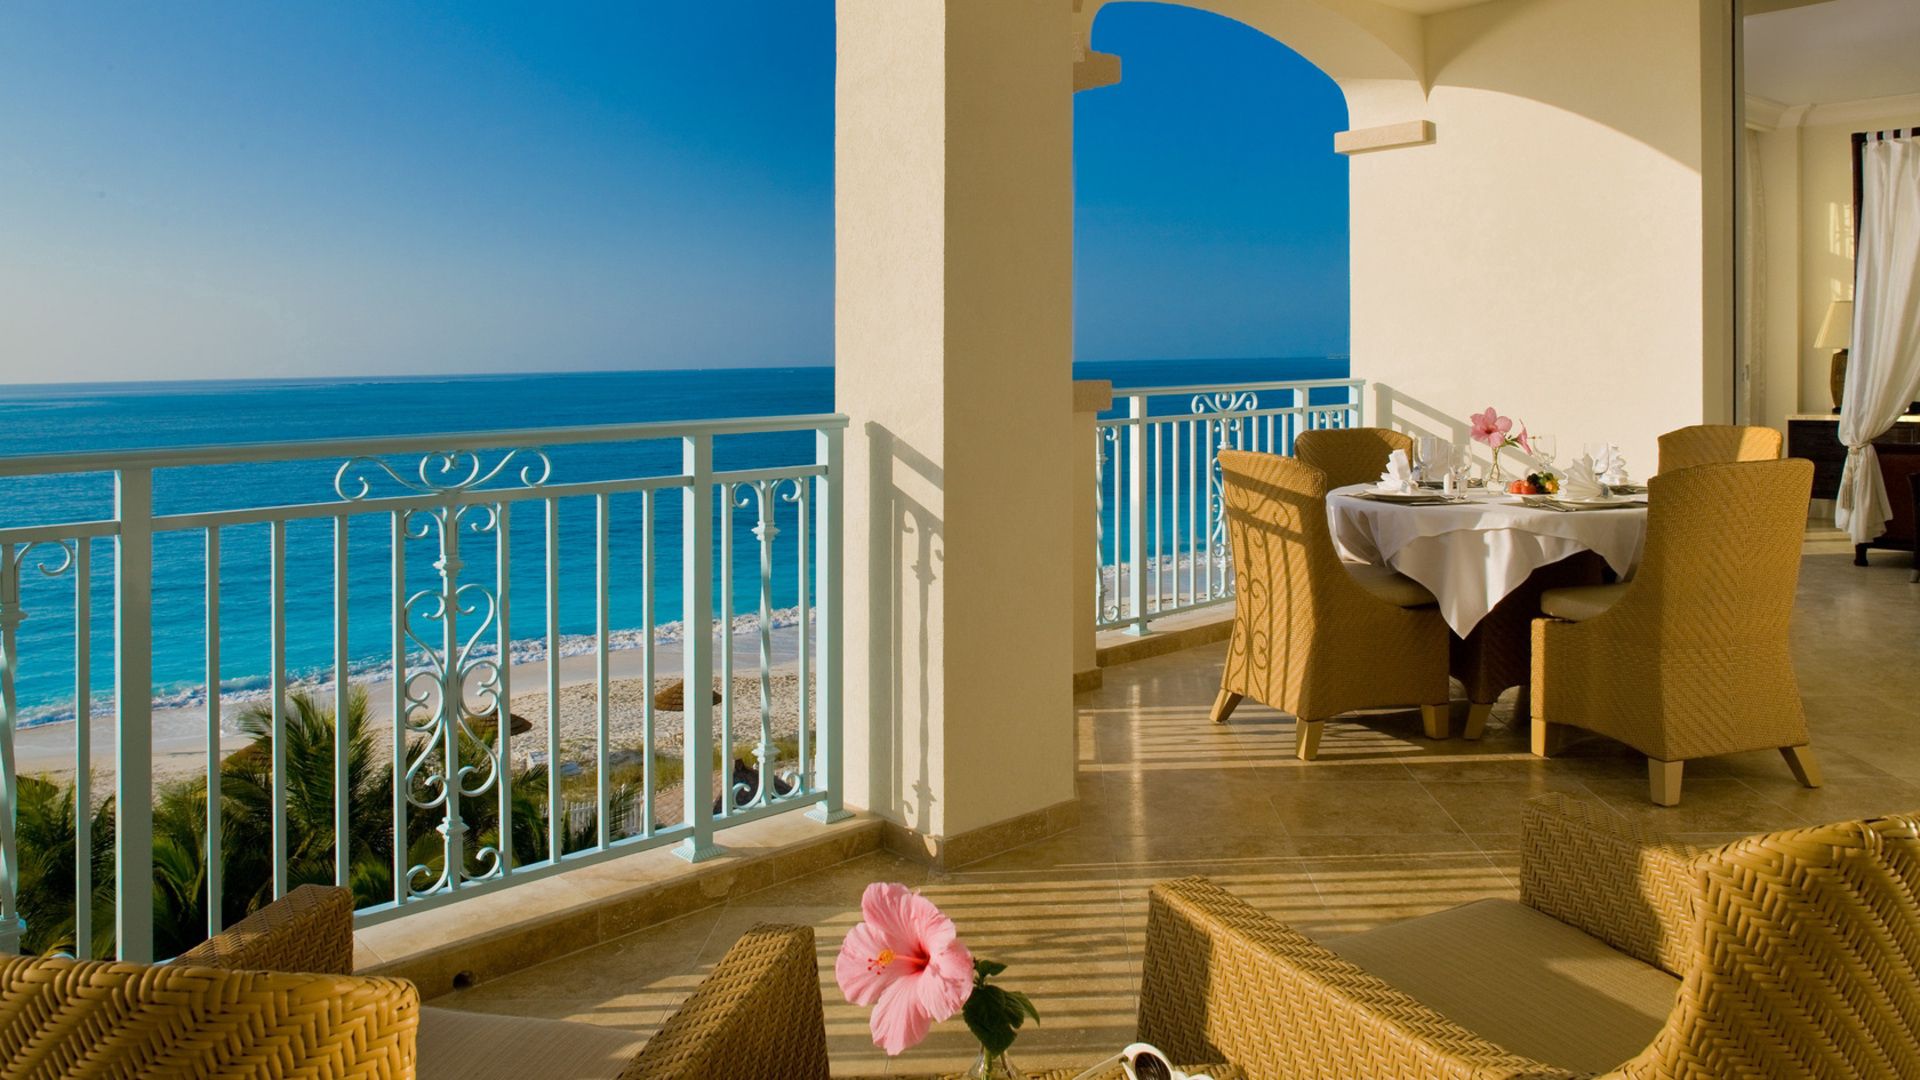 Free HD balcony, sea, beach, horizon, miscellanea, miscellaneous, relaxation, rest, view, terrace